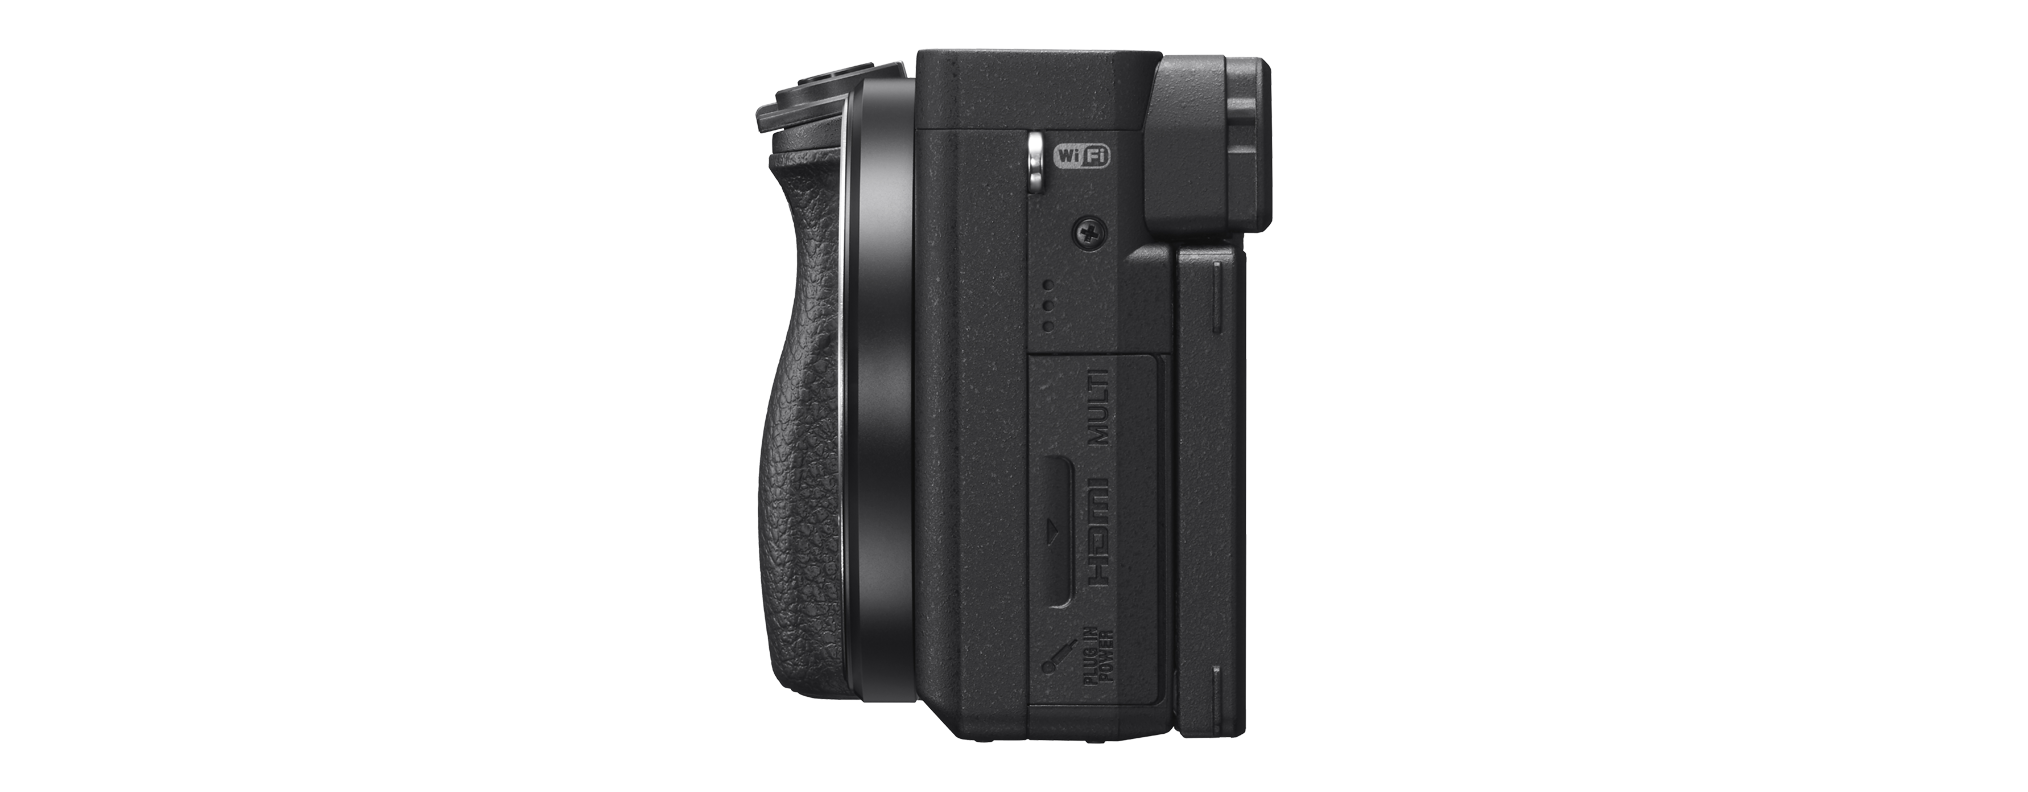 Systemkamera mm, (ILCE-6400M) Touchscreen, Display 7,6 mit Kit SONY Objektiv WLAN cm 6400 18-135 Alpha